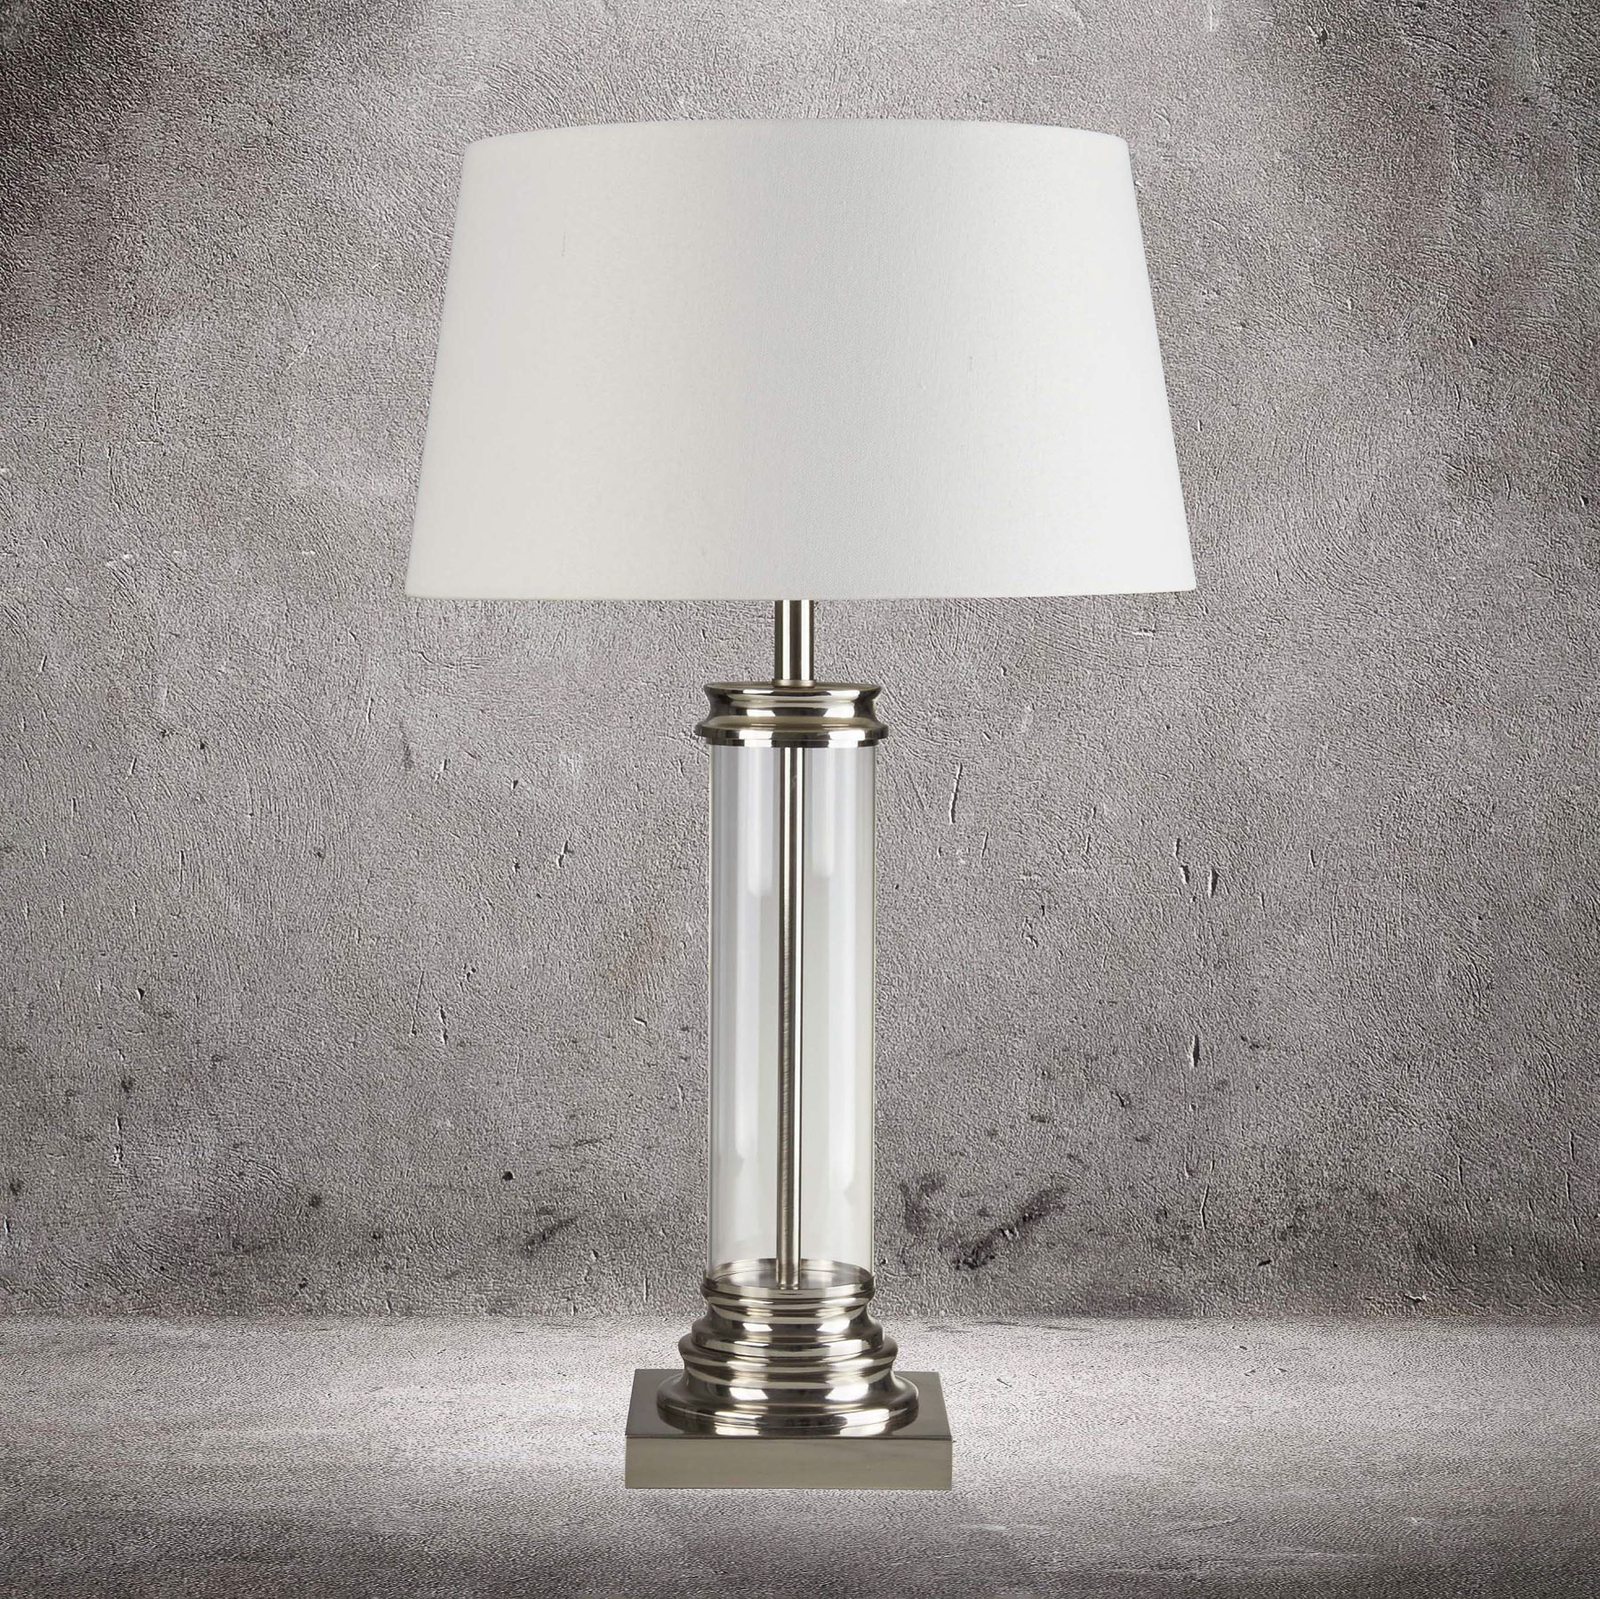 Tafellamp Pedestal, zilver met kap in crème